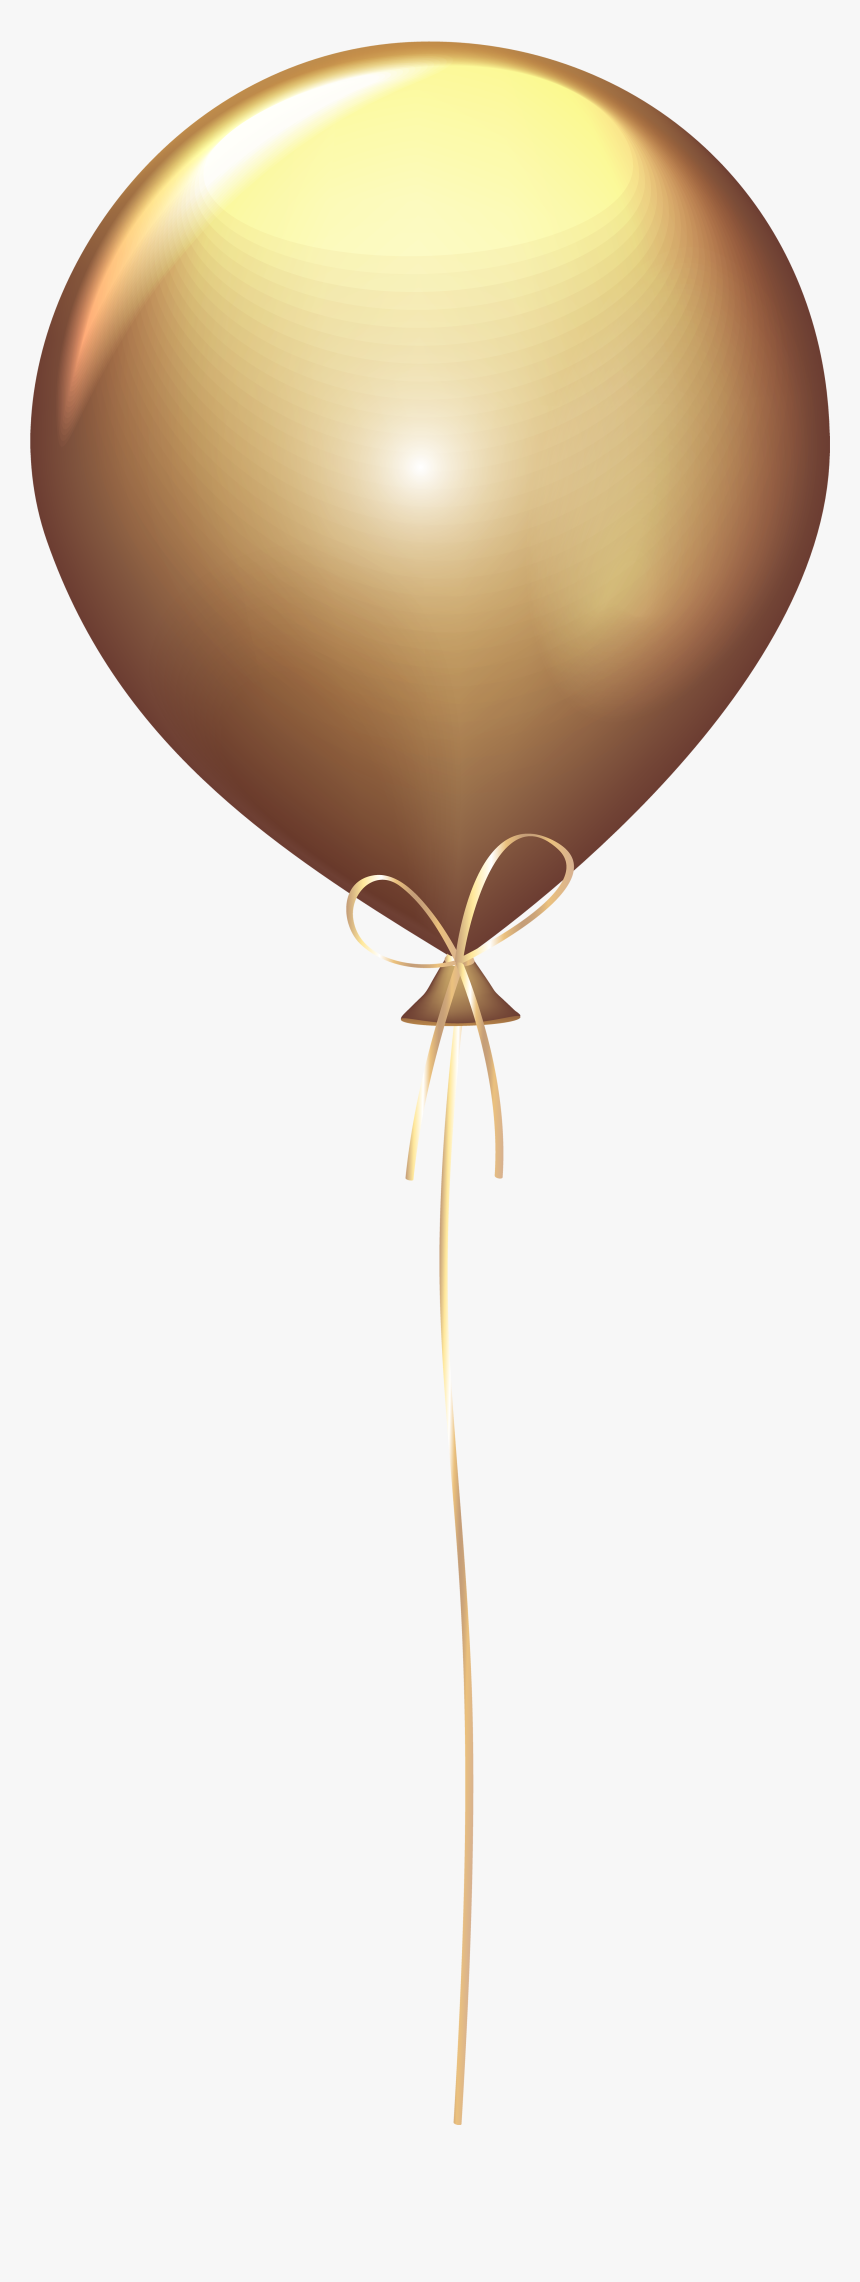 Transparent Clip Art Image - Golden Balloon Png Transparent, Png Download, Free Download